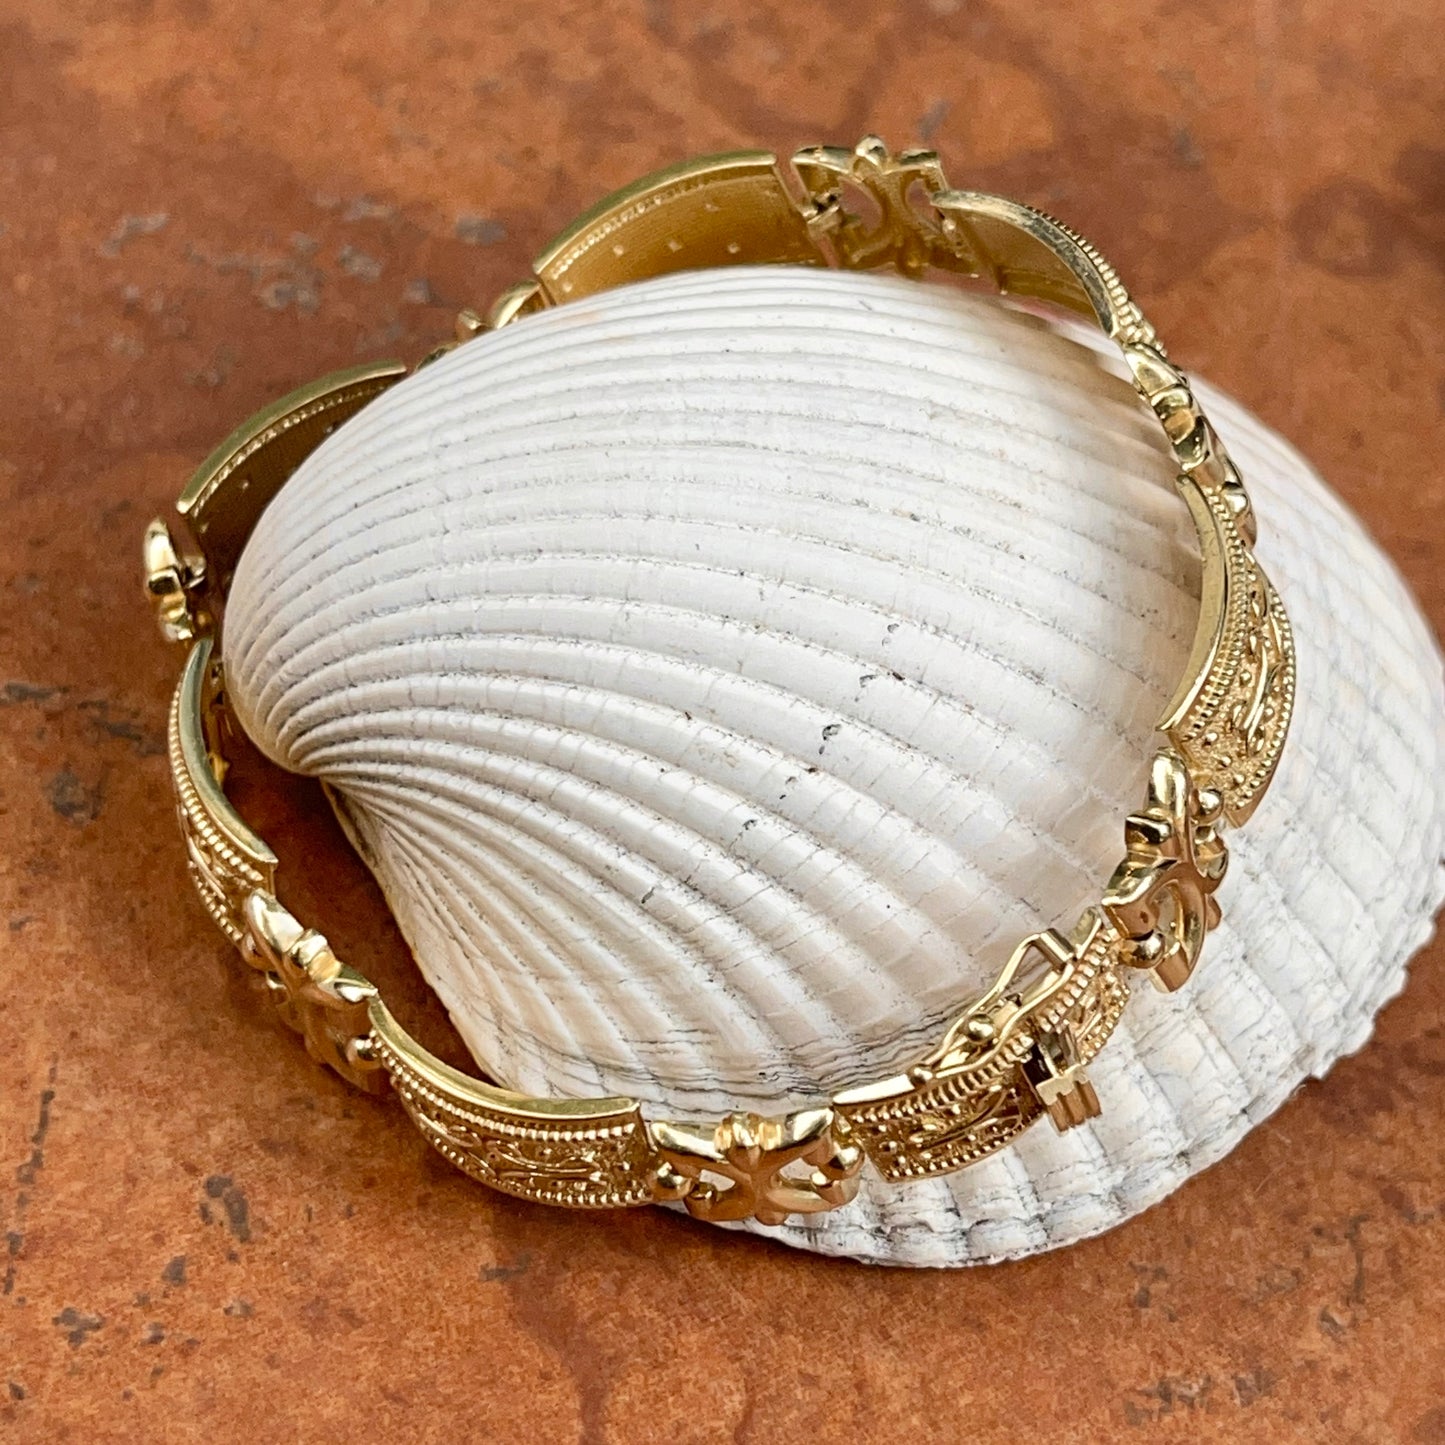 Estate 14KT Yellow Gold Rectangle Byzantine Textured Link Bracelet